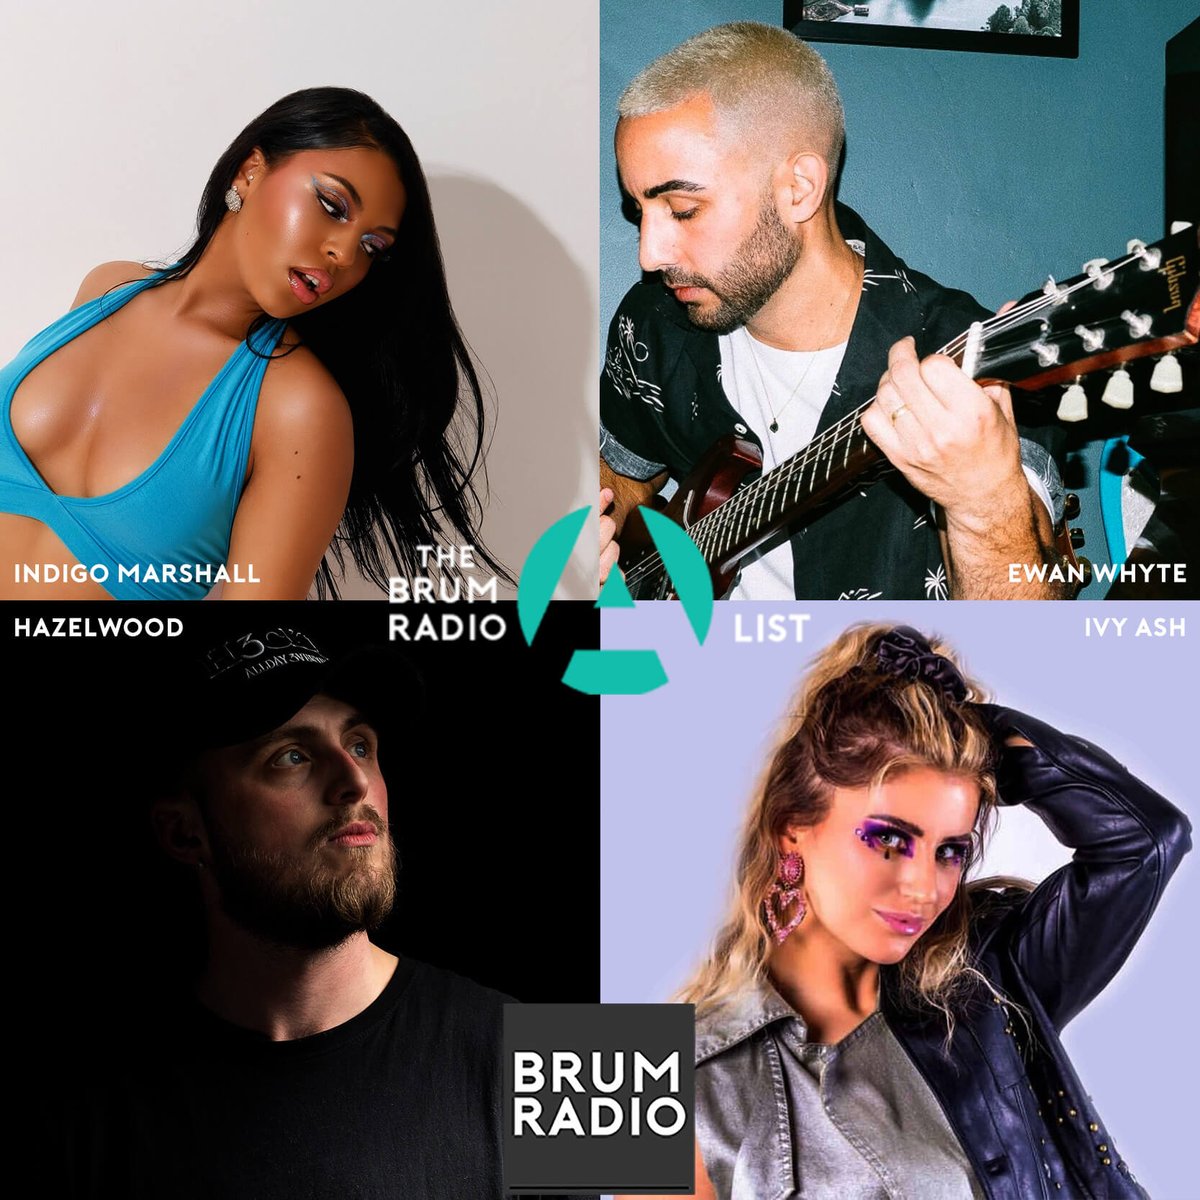 COMING UP at 2pm (UK Time) >> The OFFICIAL Brum Radio A-List with @JennIsGreat Featuring brand new music from artists inc: @indigomarshallx @ewanwhytemusic Hazelwood & @IvyAshMusic Listen live to @BrumRadioAlist at brumradio.com #InBrumWeTrust #Birmingham